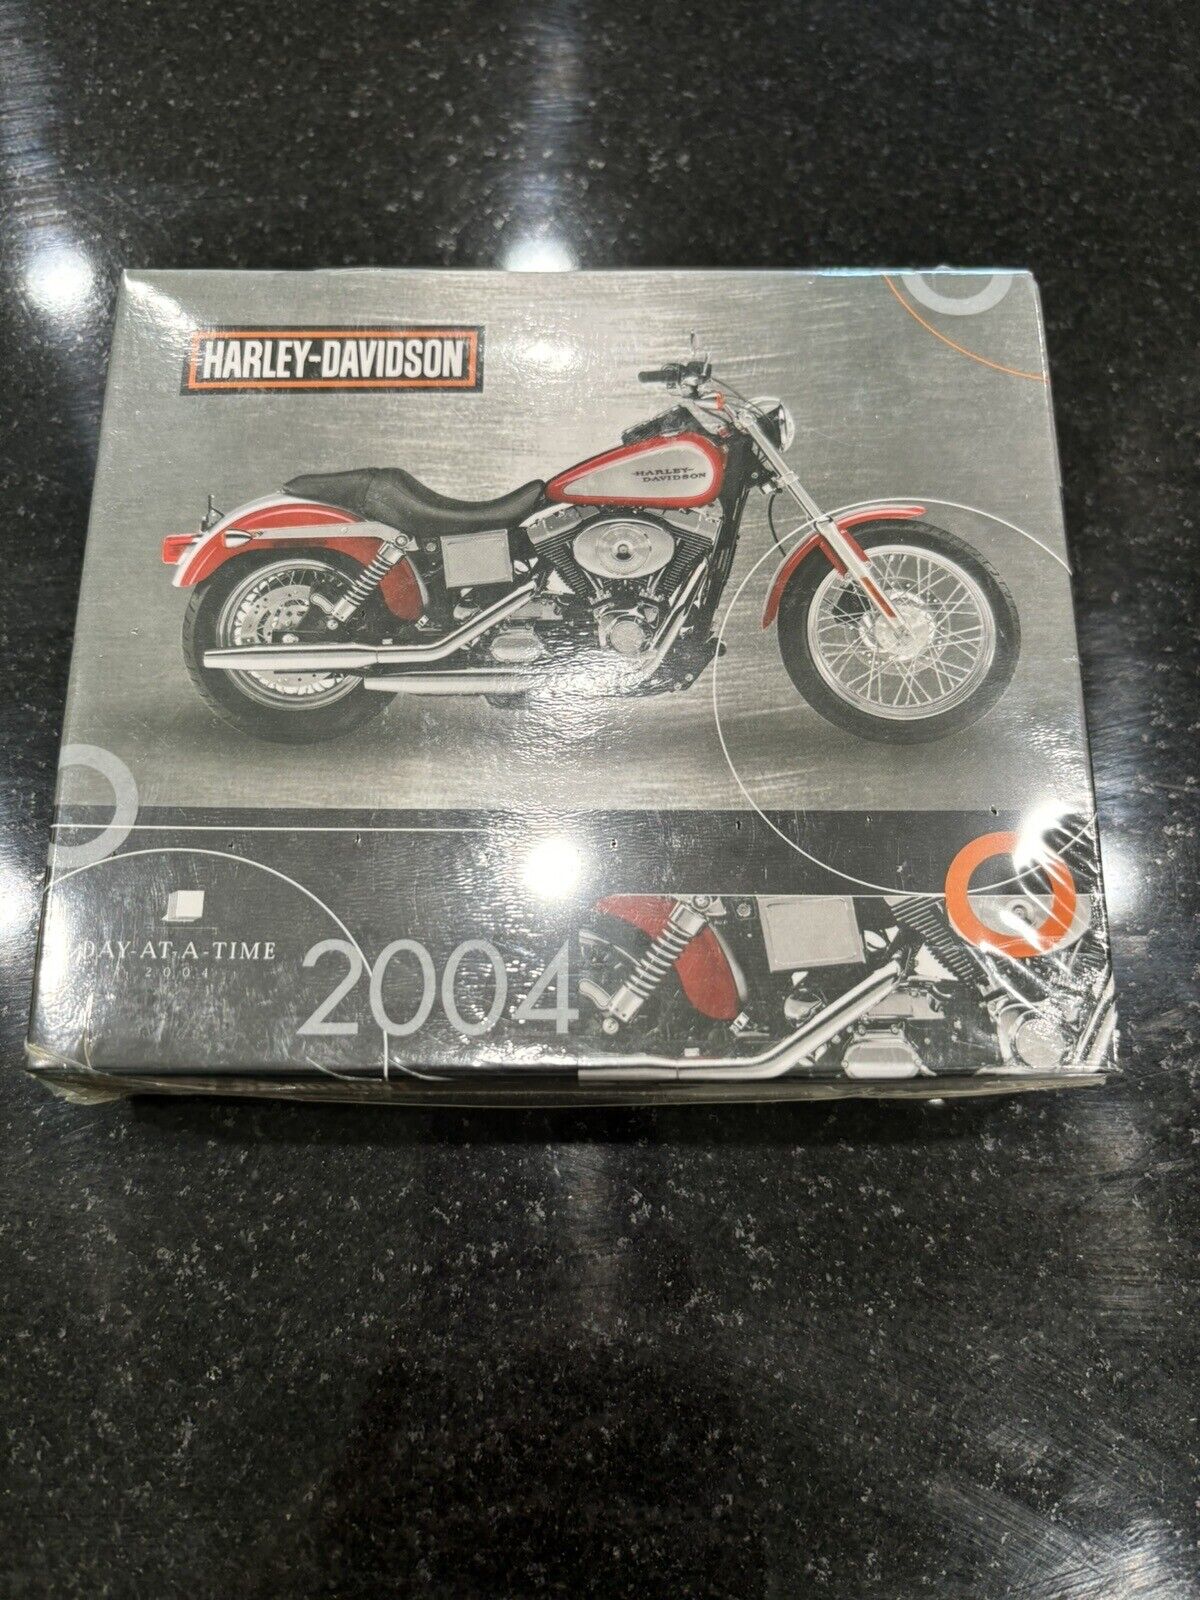 Harley Davidson 2004 Day At A Time